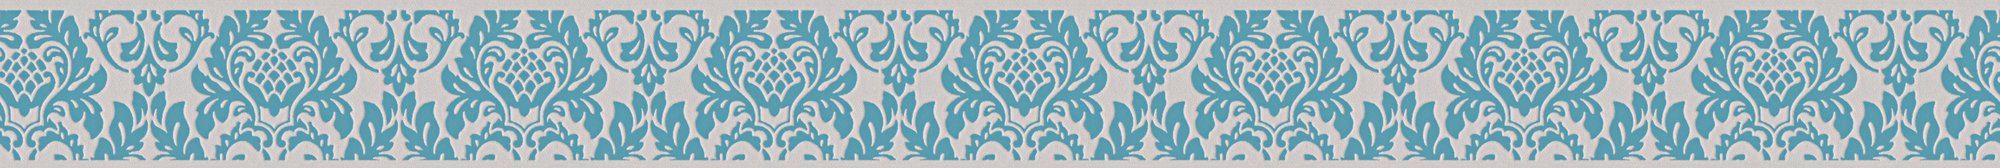 A.S. Création Bordüre Only Borders, aufgeschäumt, Barock, Barock Bordüre Ornament selbstklebend blau/creme | Selbstklebende Bordüren